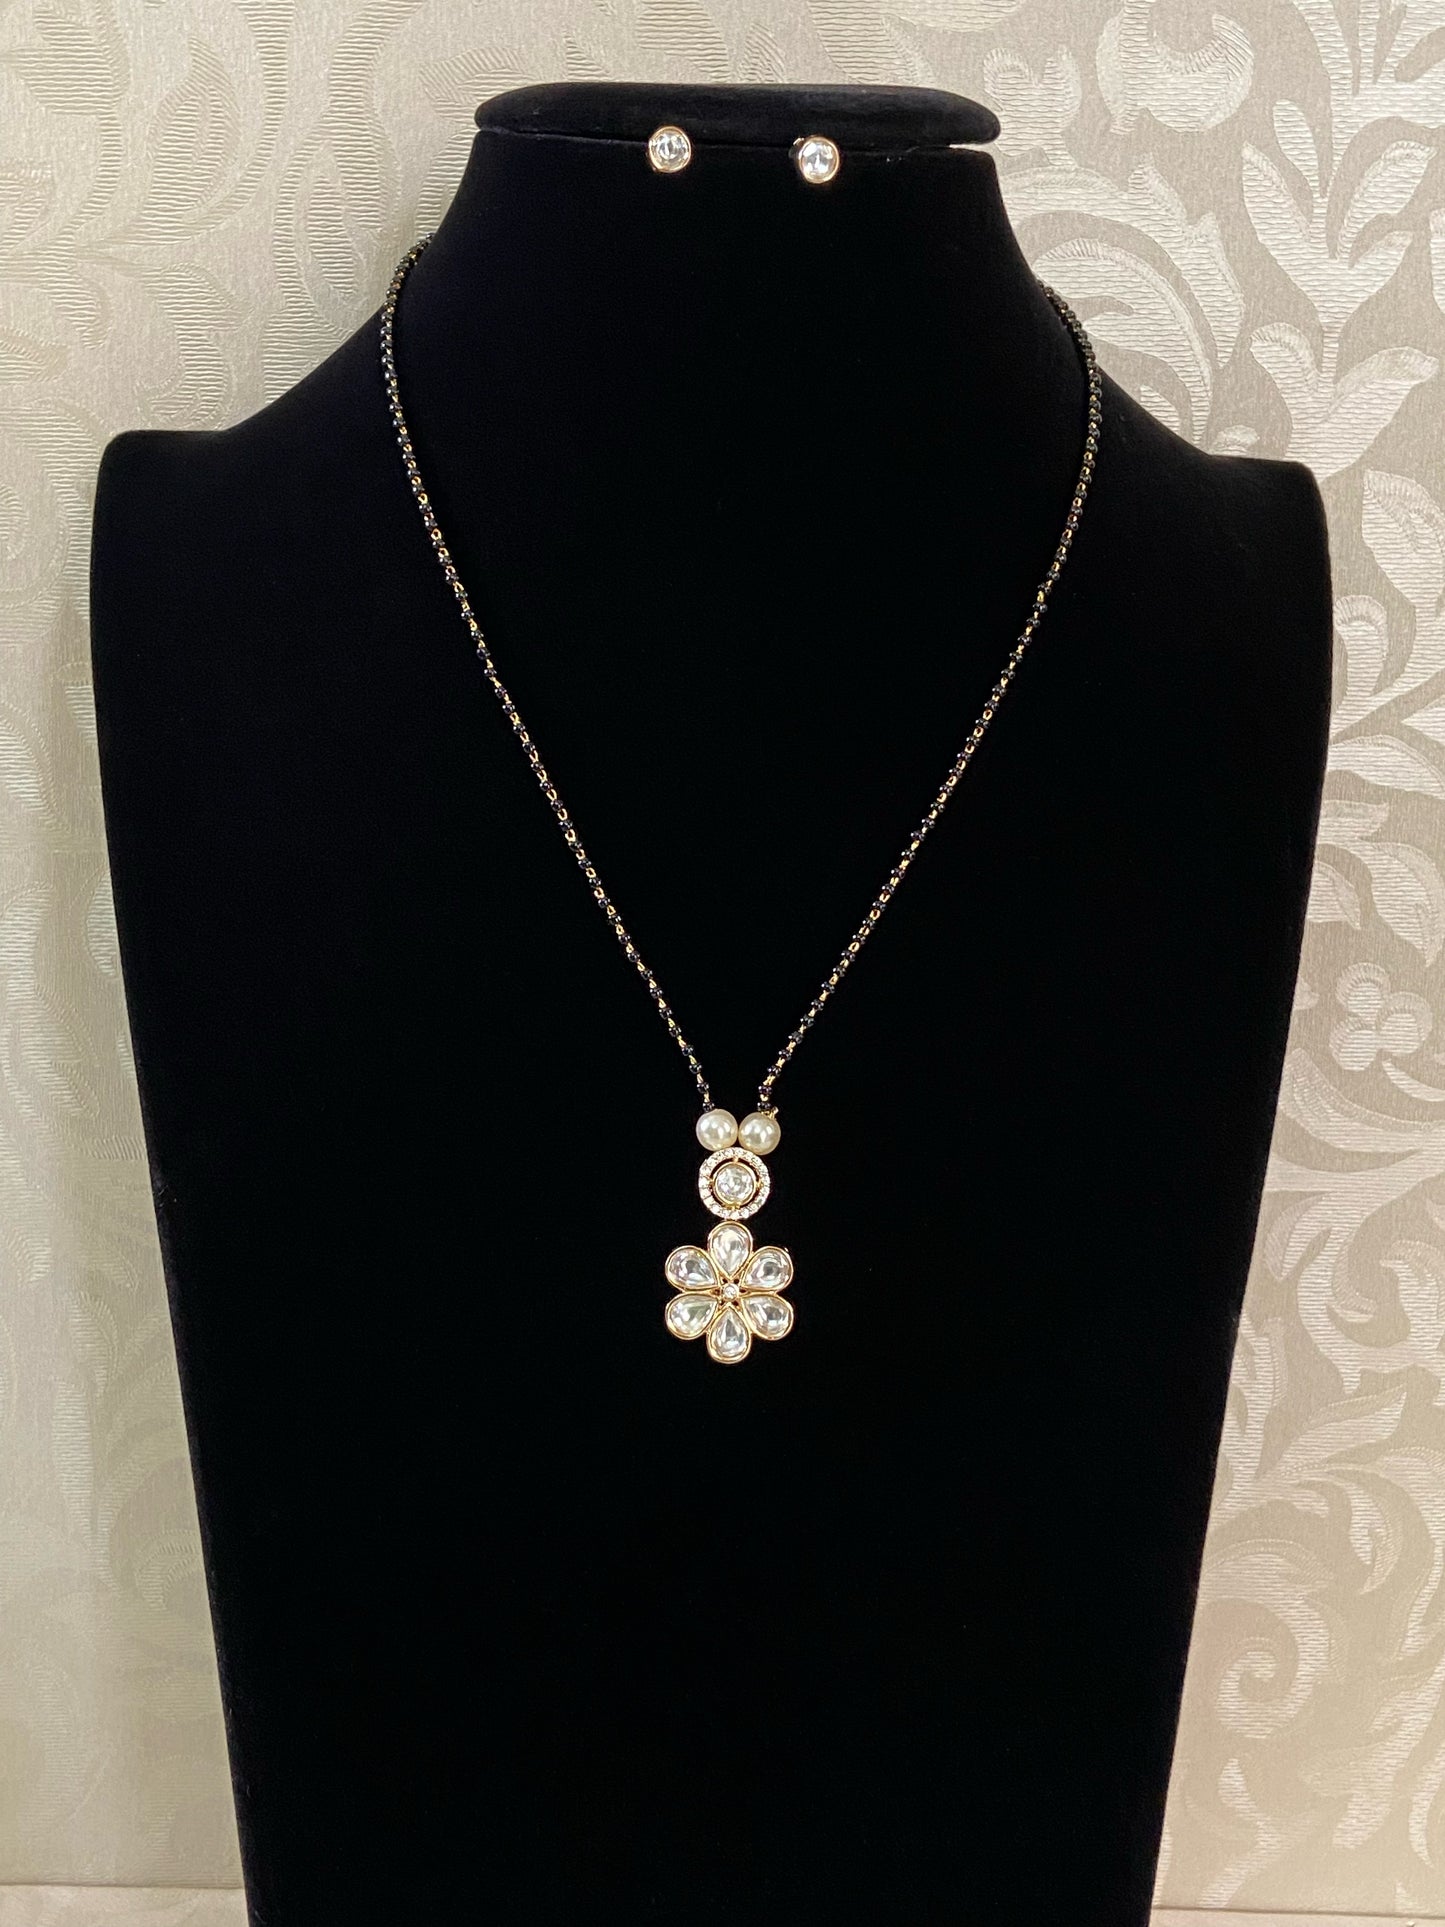 Kundan pendant mangalsutra | black beads necklace